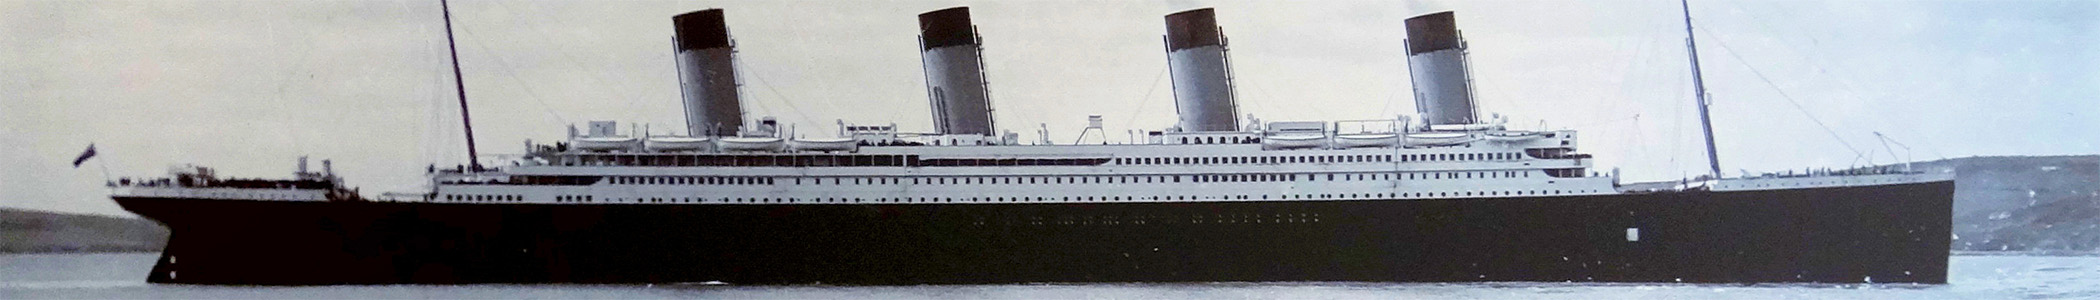 Rms Titanic #6